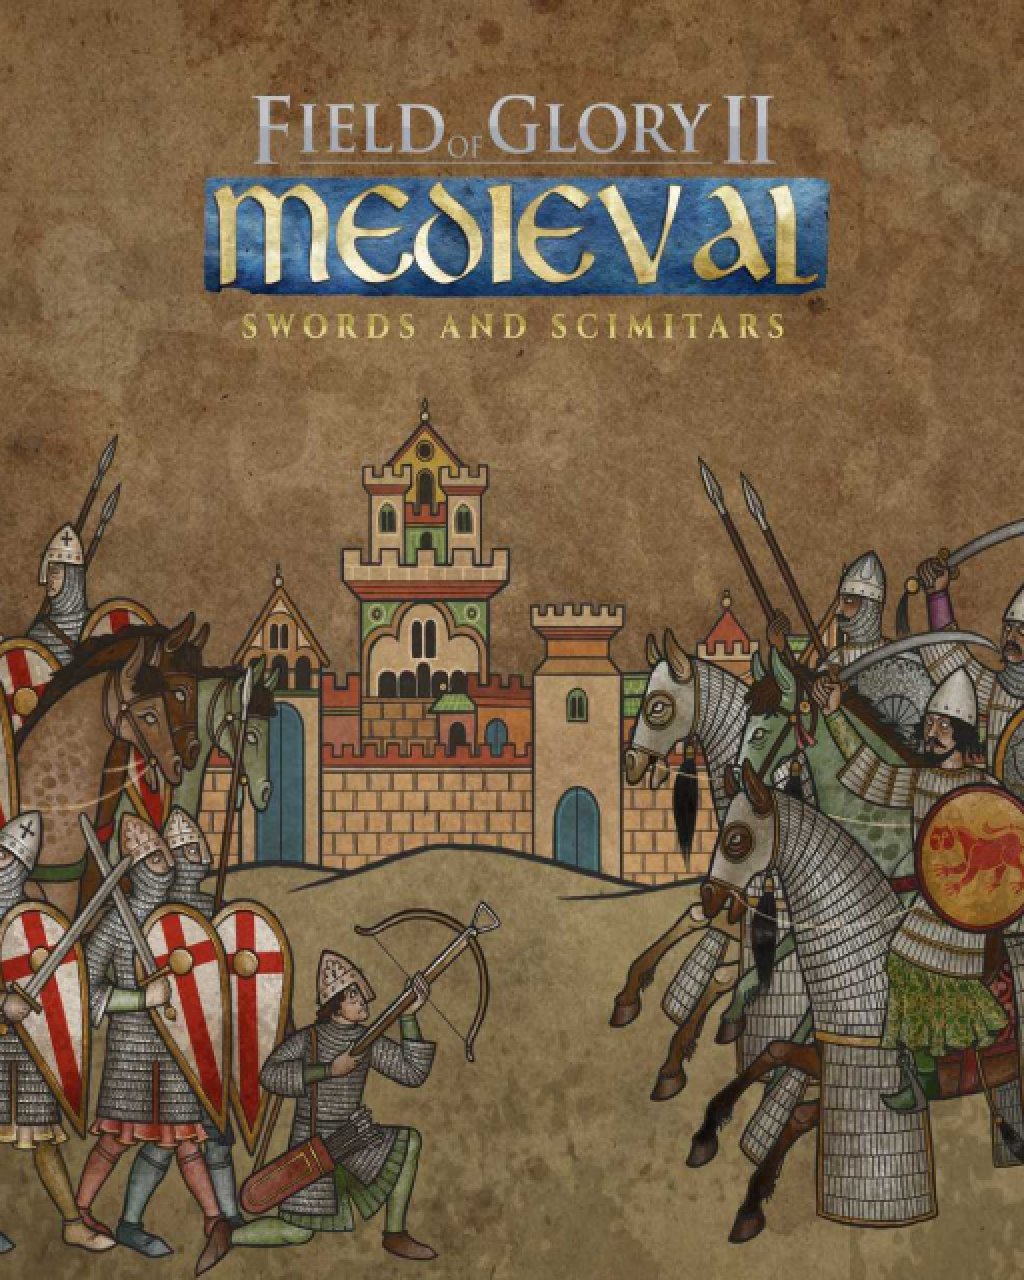 Field of Glory II Medieval Swords and Scimitars